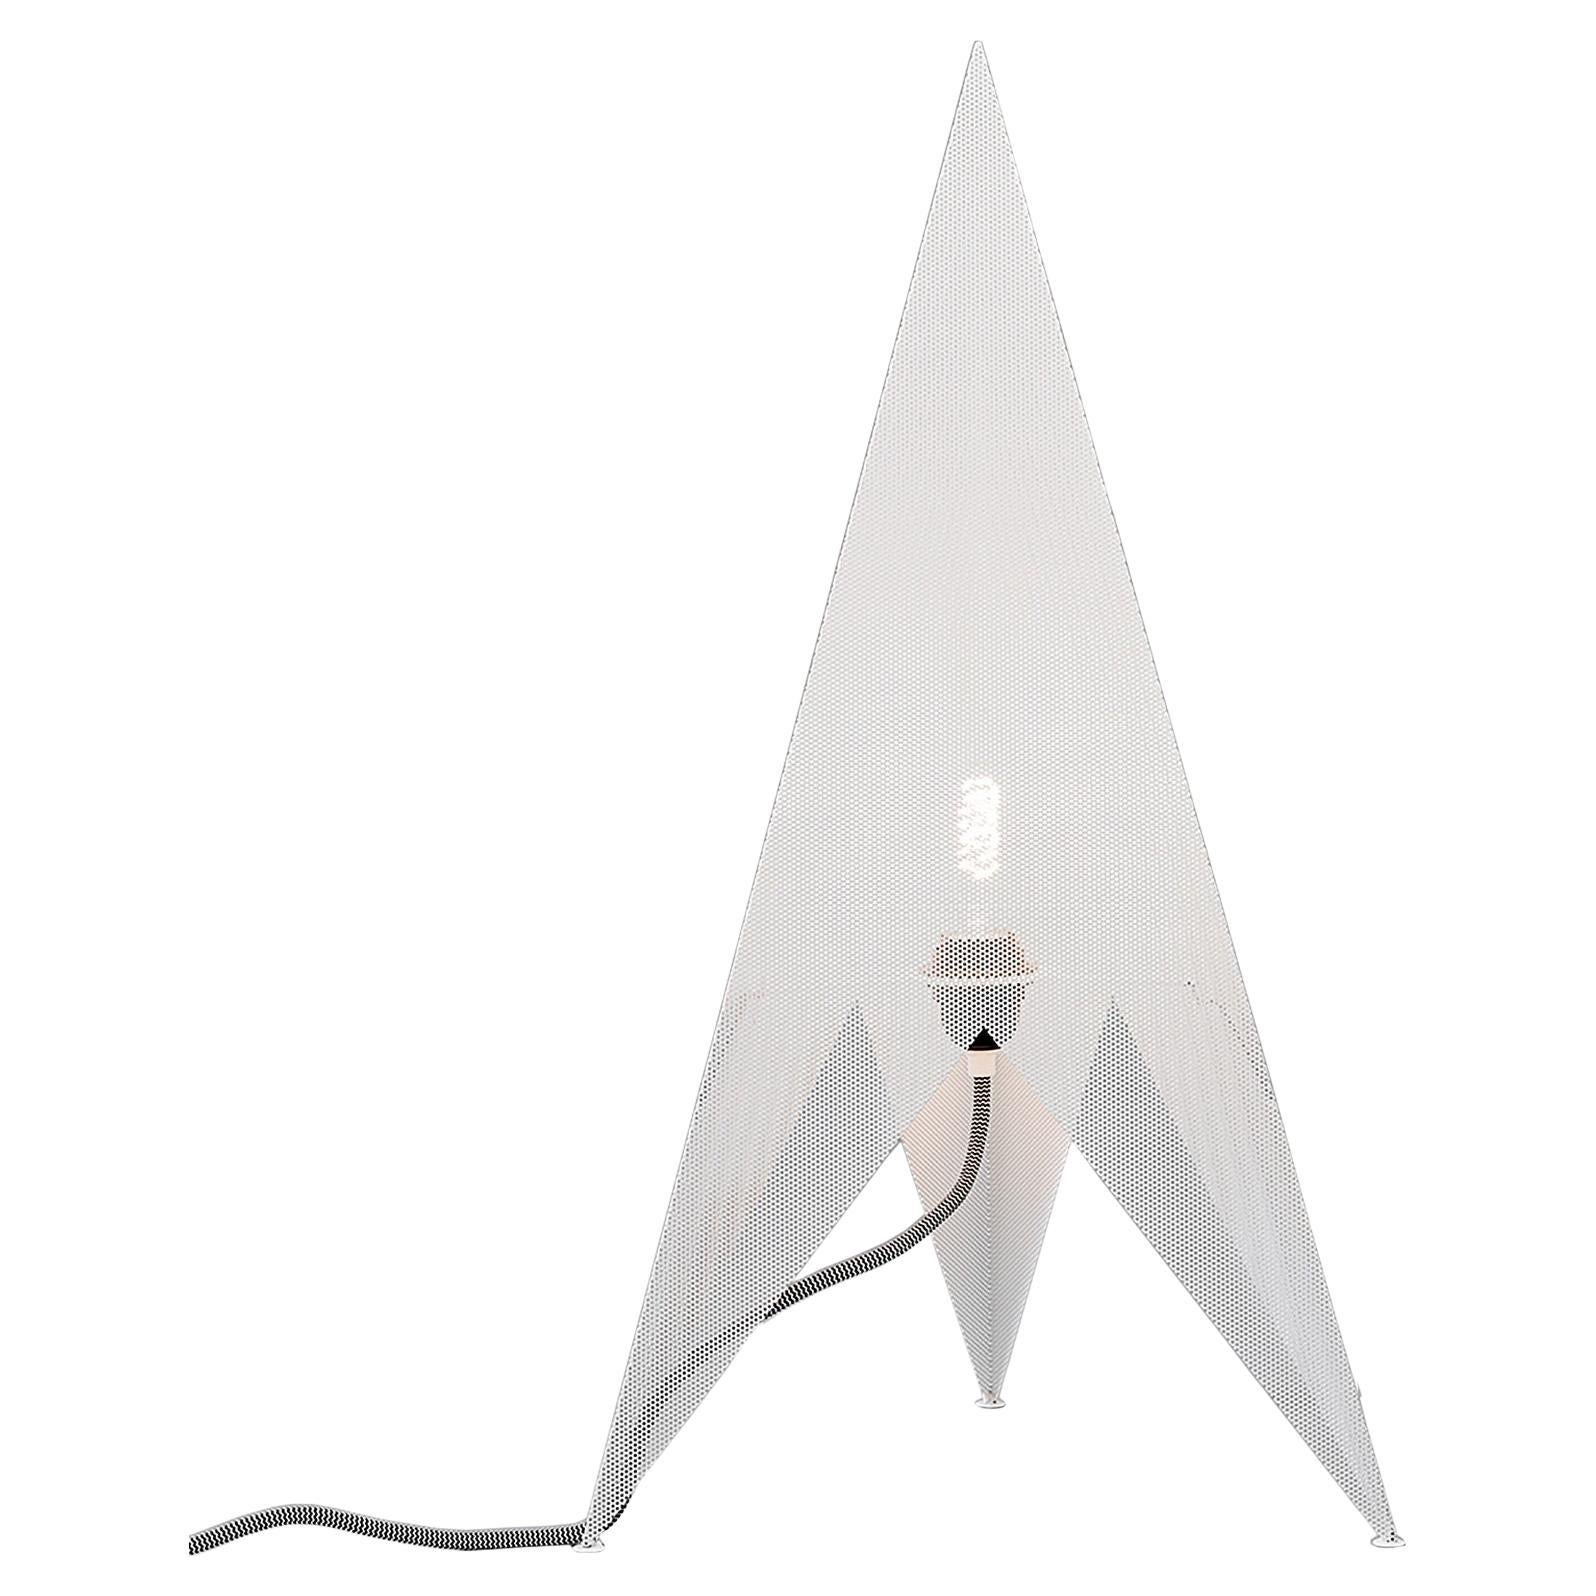 Perforated Metal Rocket Lamp, Designer Light, 28 in High For Sale